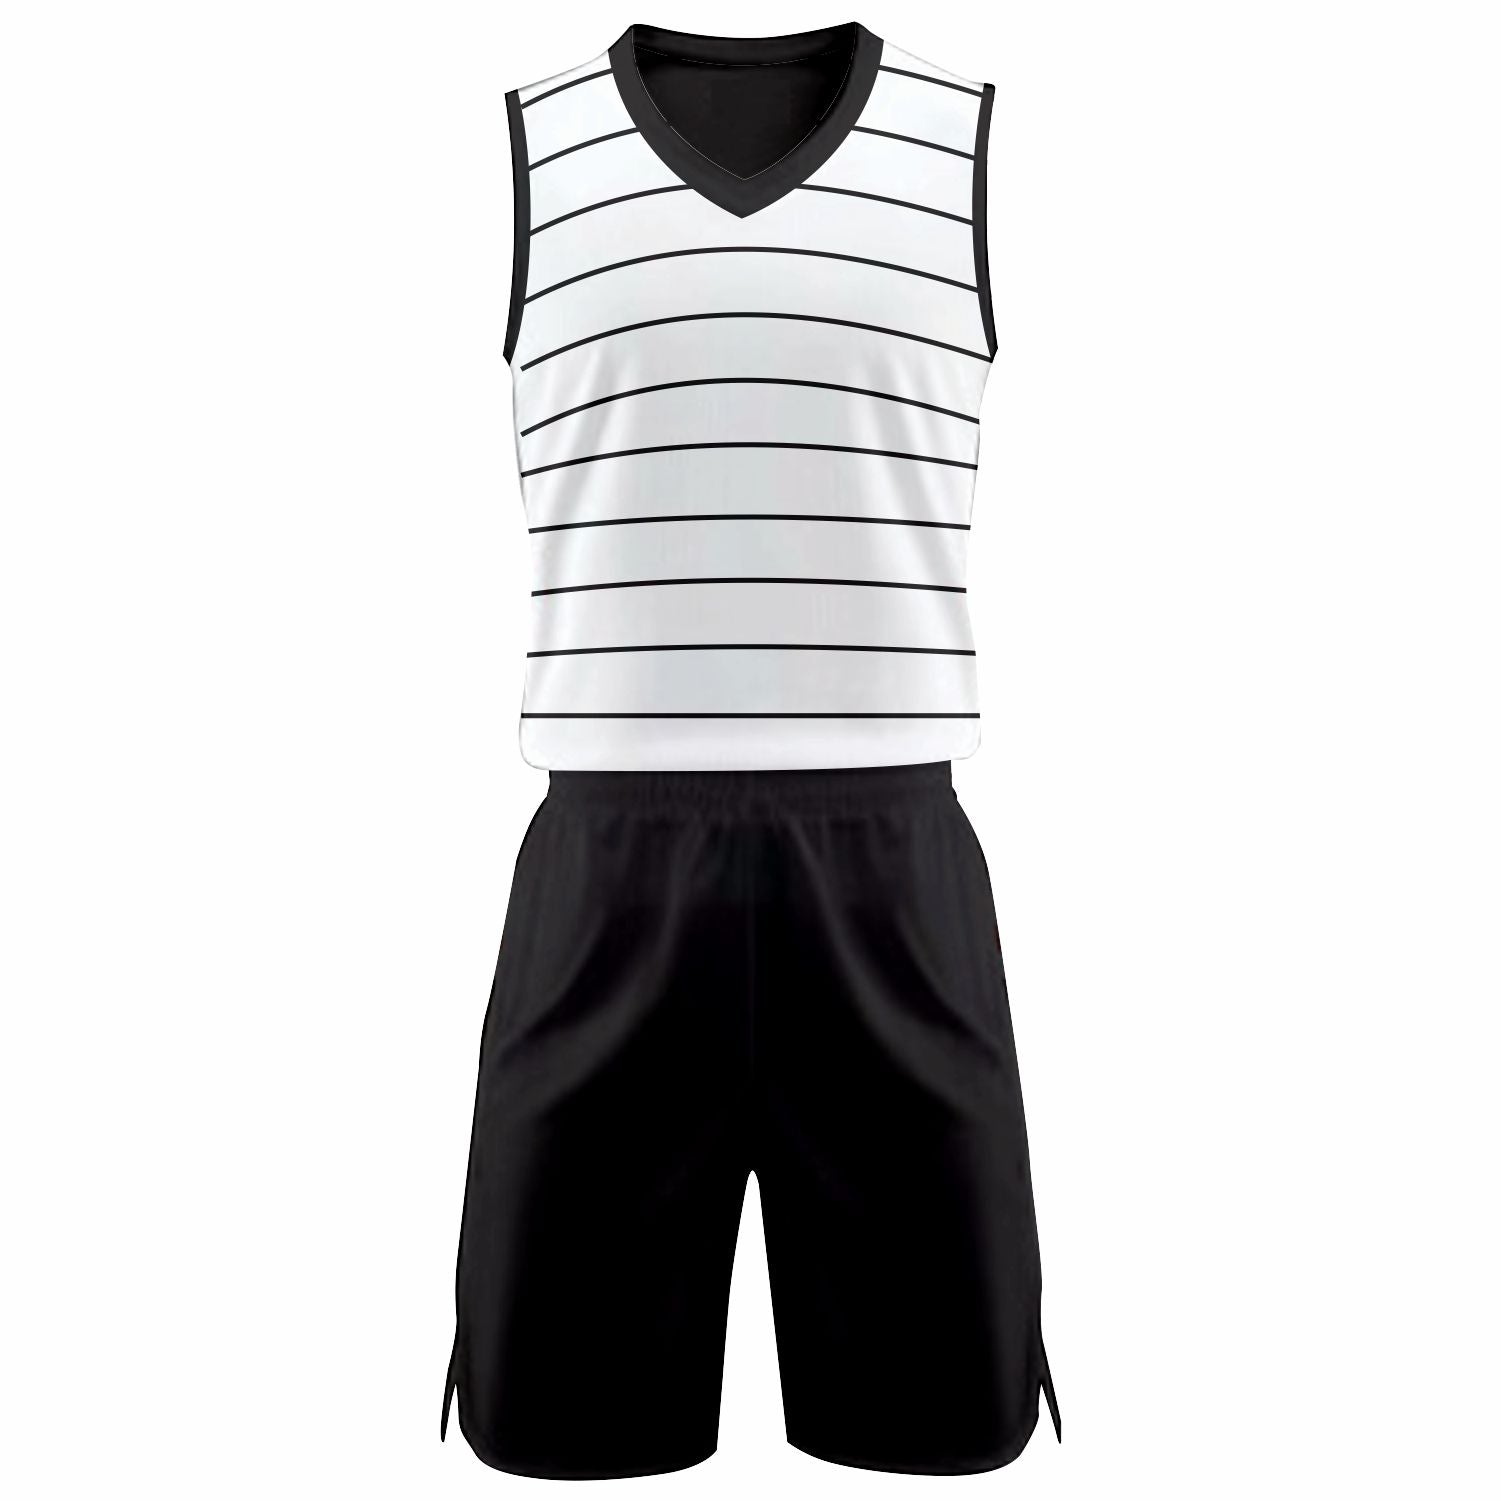 Berlin NS Basketball Uniform With Customization Option, White